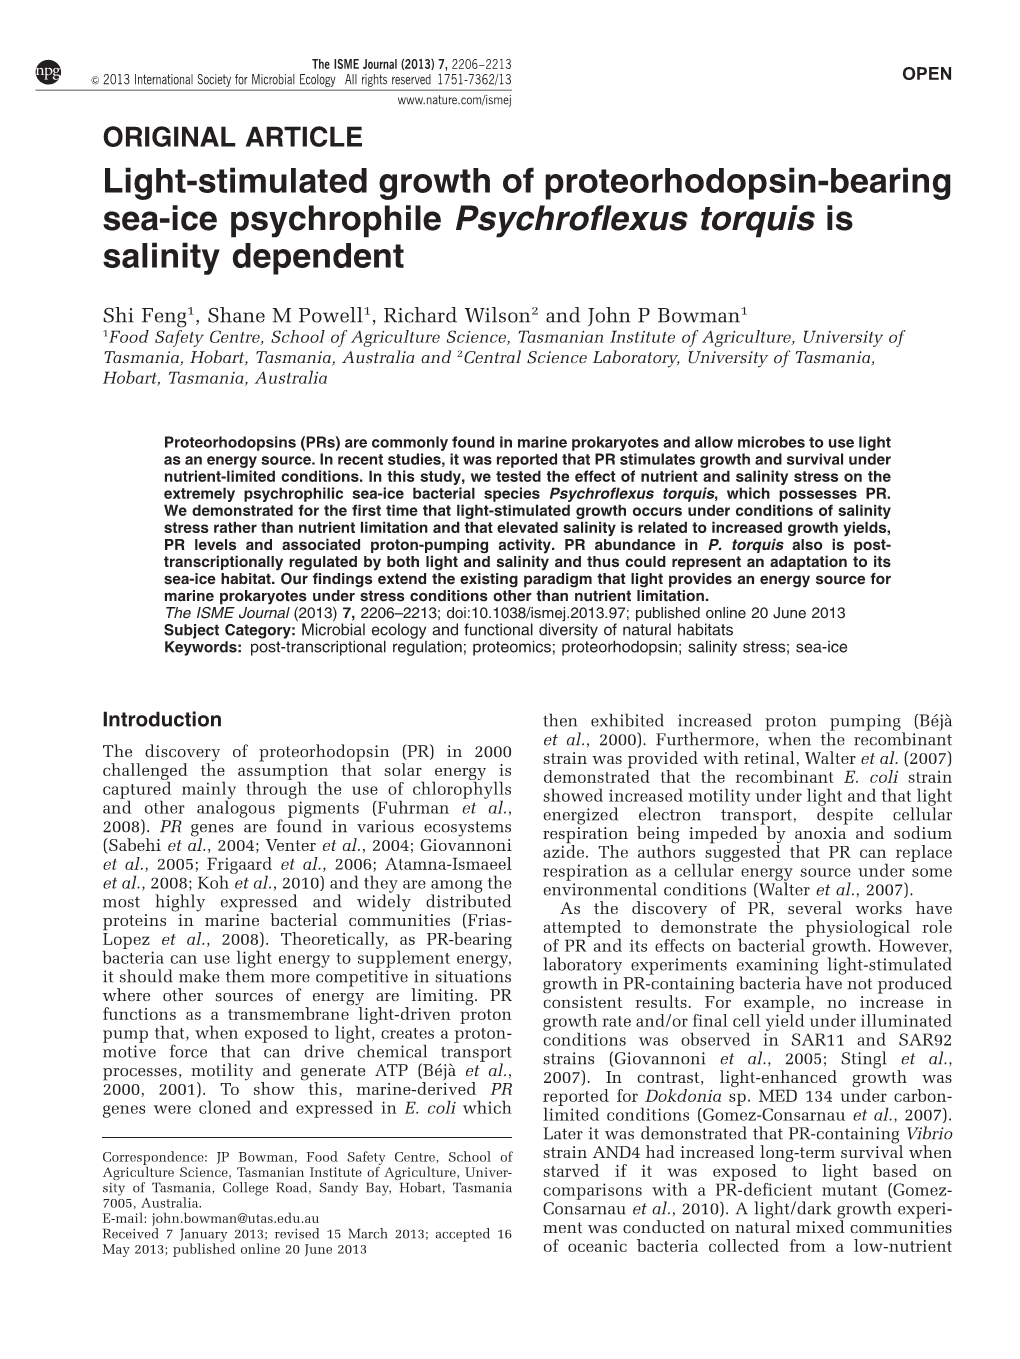 Light-Stimulated Growth of Proteorhodopsin-Bearing Sea-Ice Psychrophile Psychroflexus Torquis Is Salinity Dependent